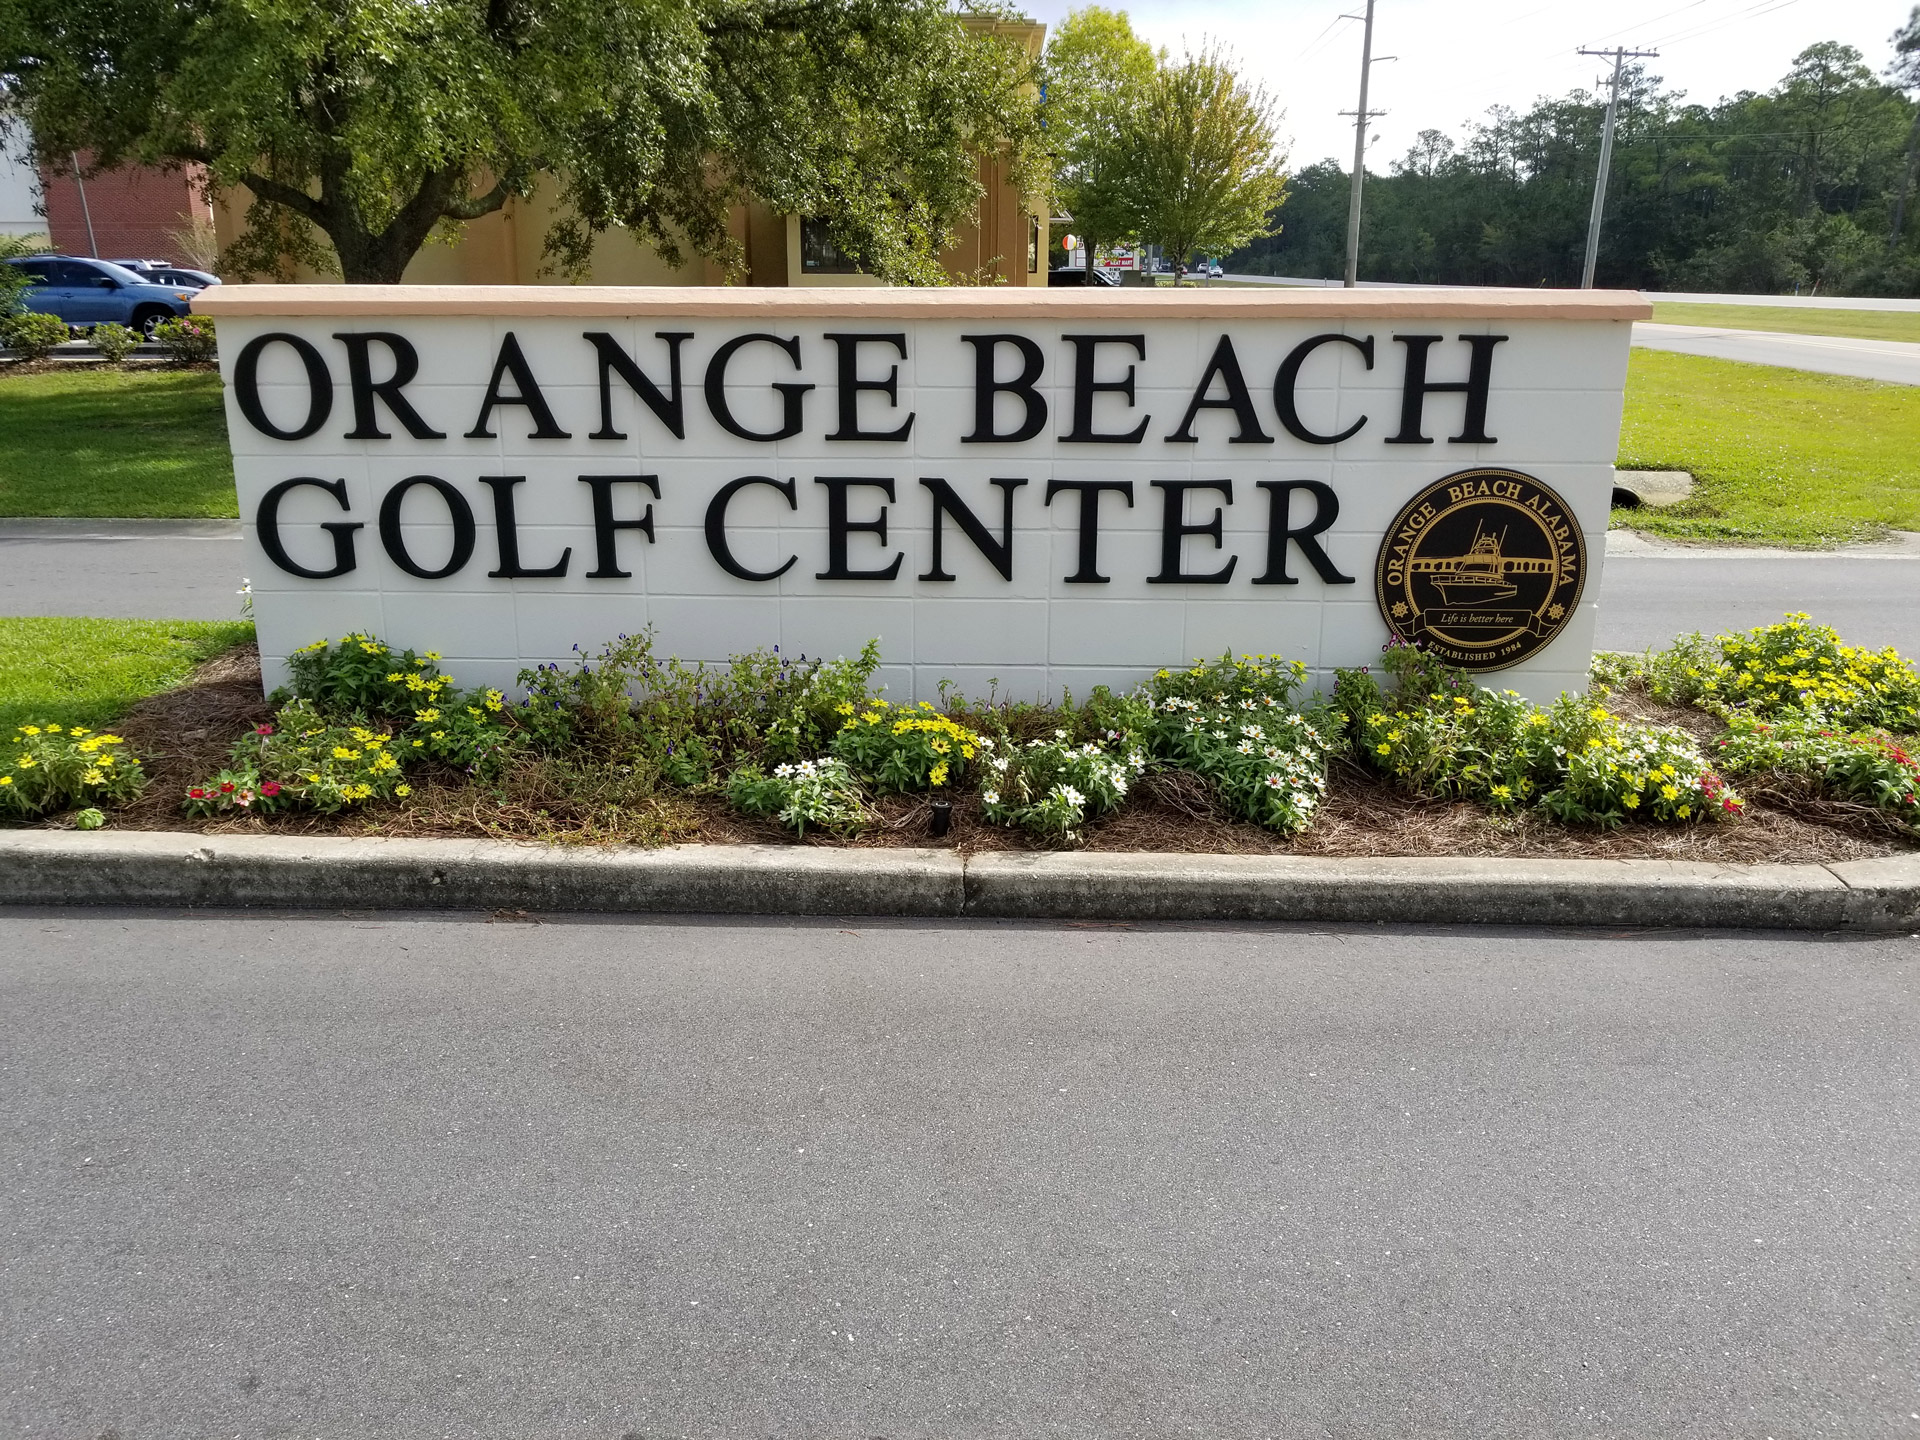 Orange Beach Golf Center in Gulf Shores, AL